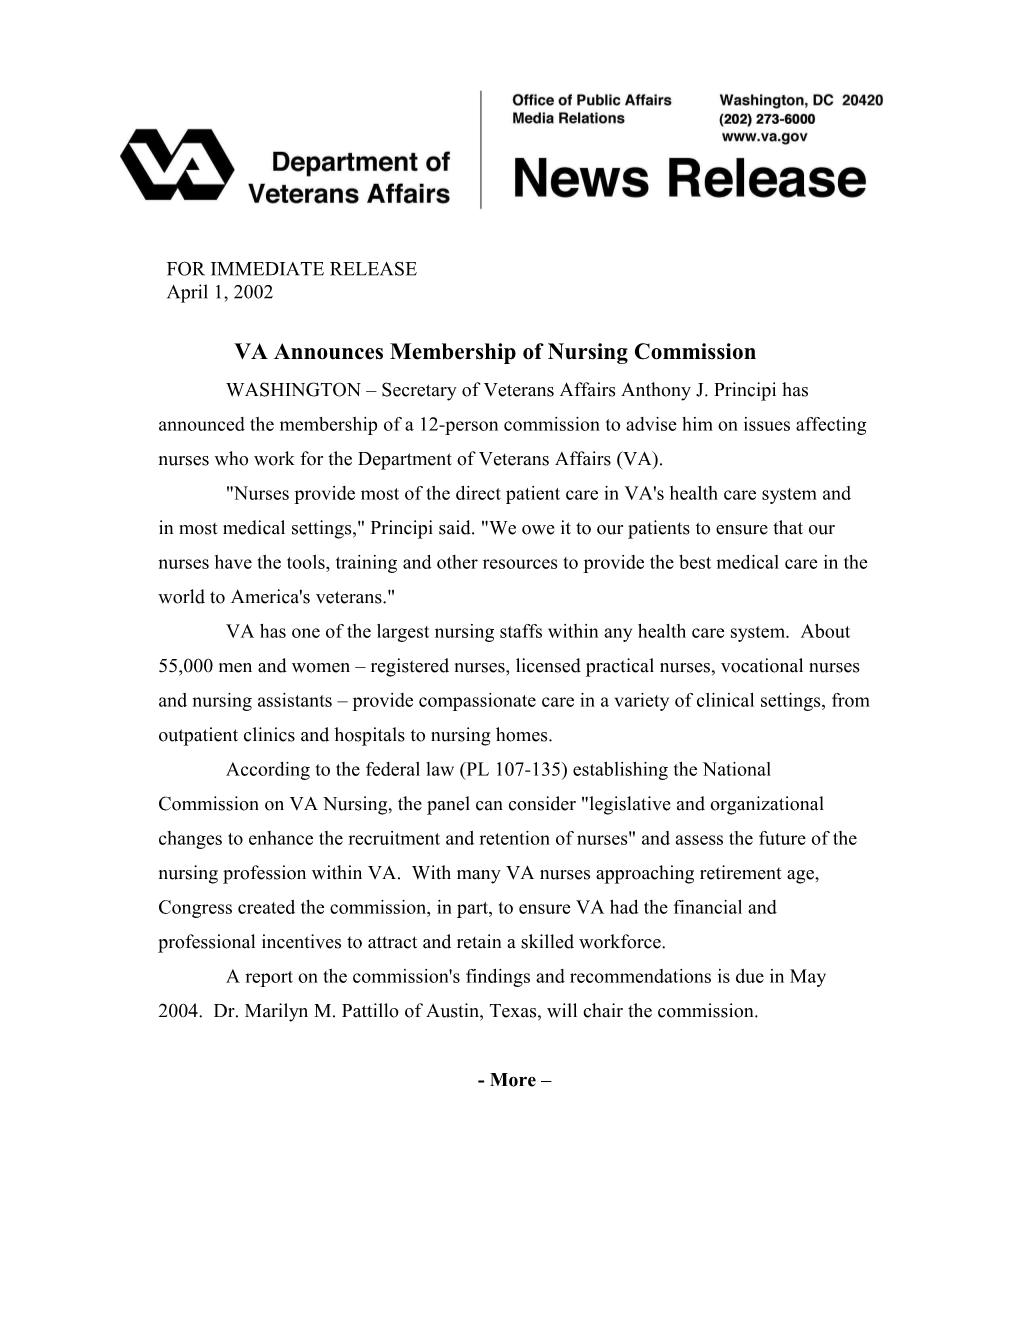 VA Announces Membership of Nursing Commission